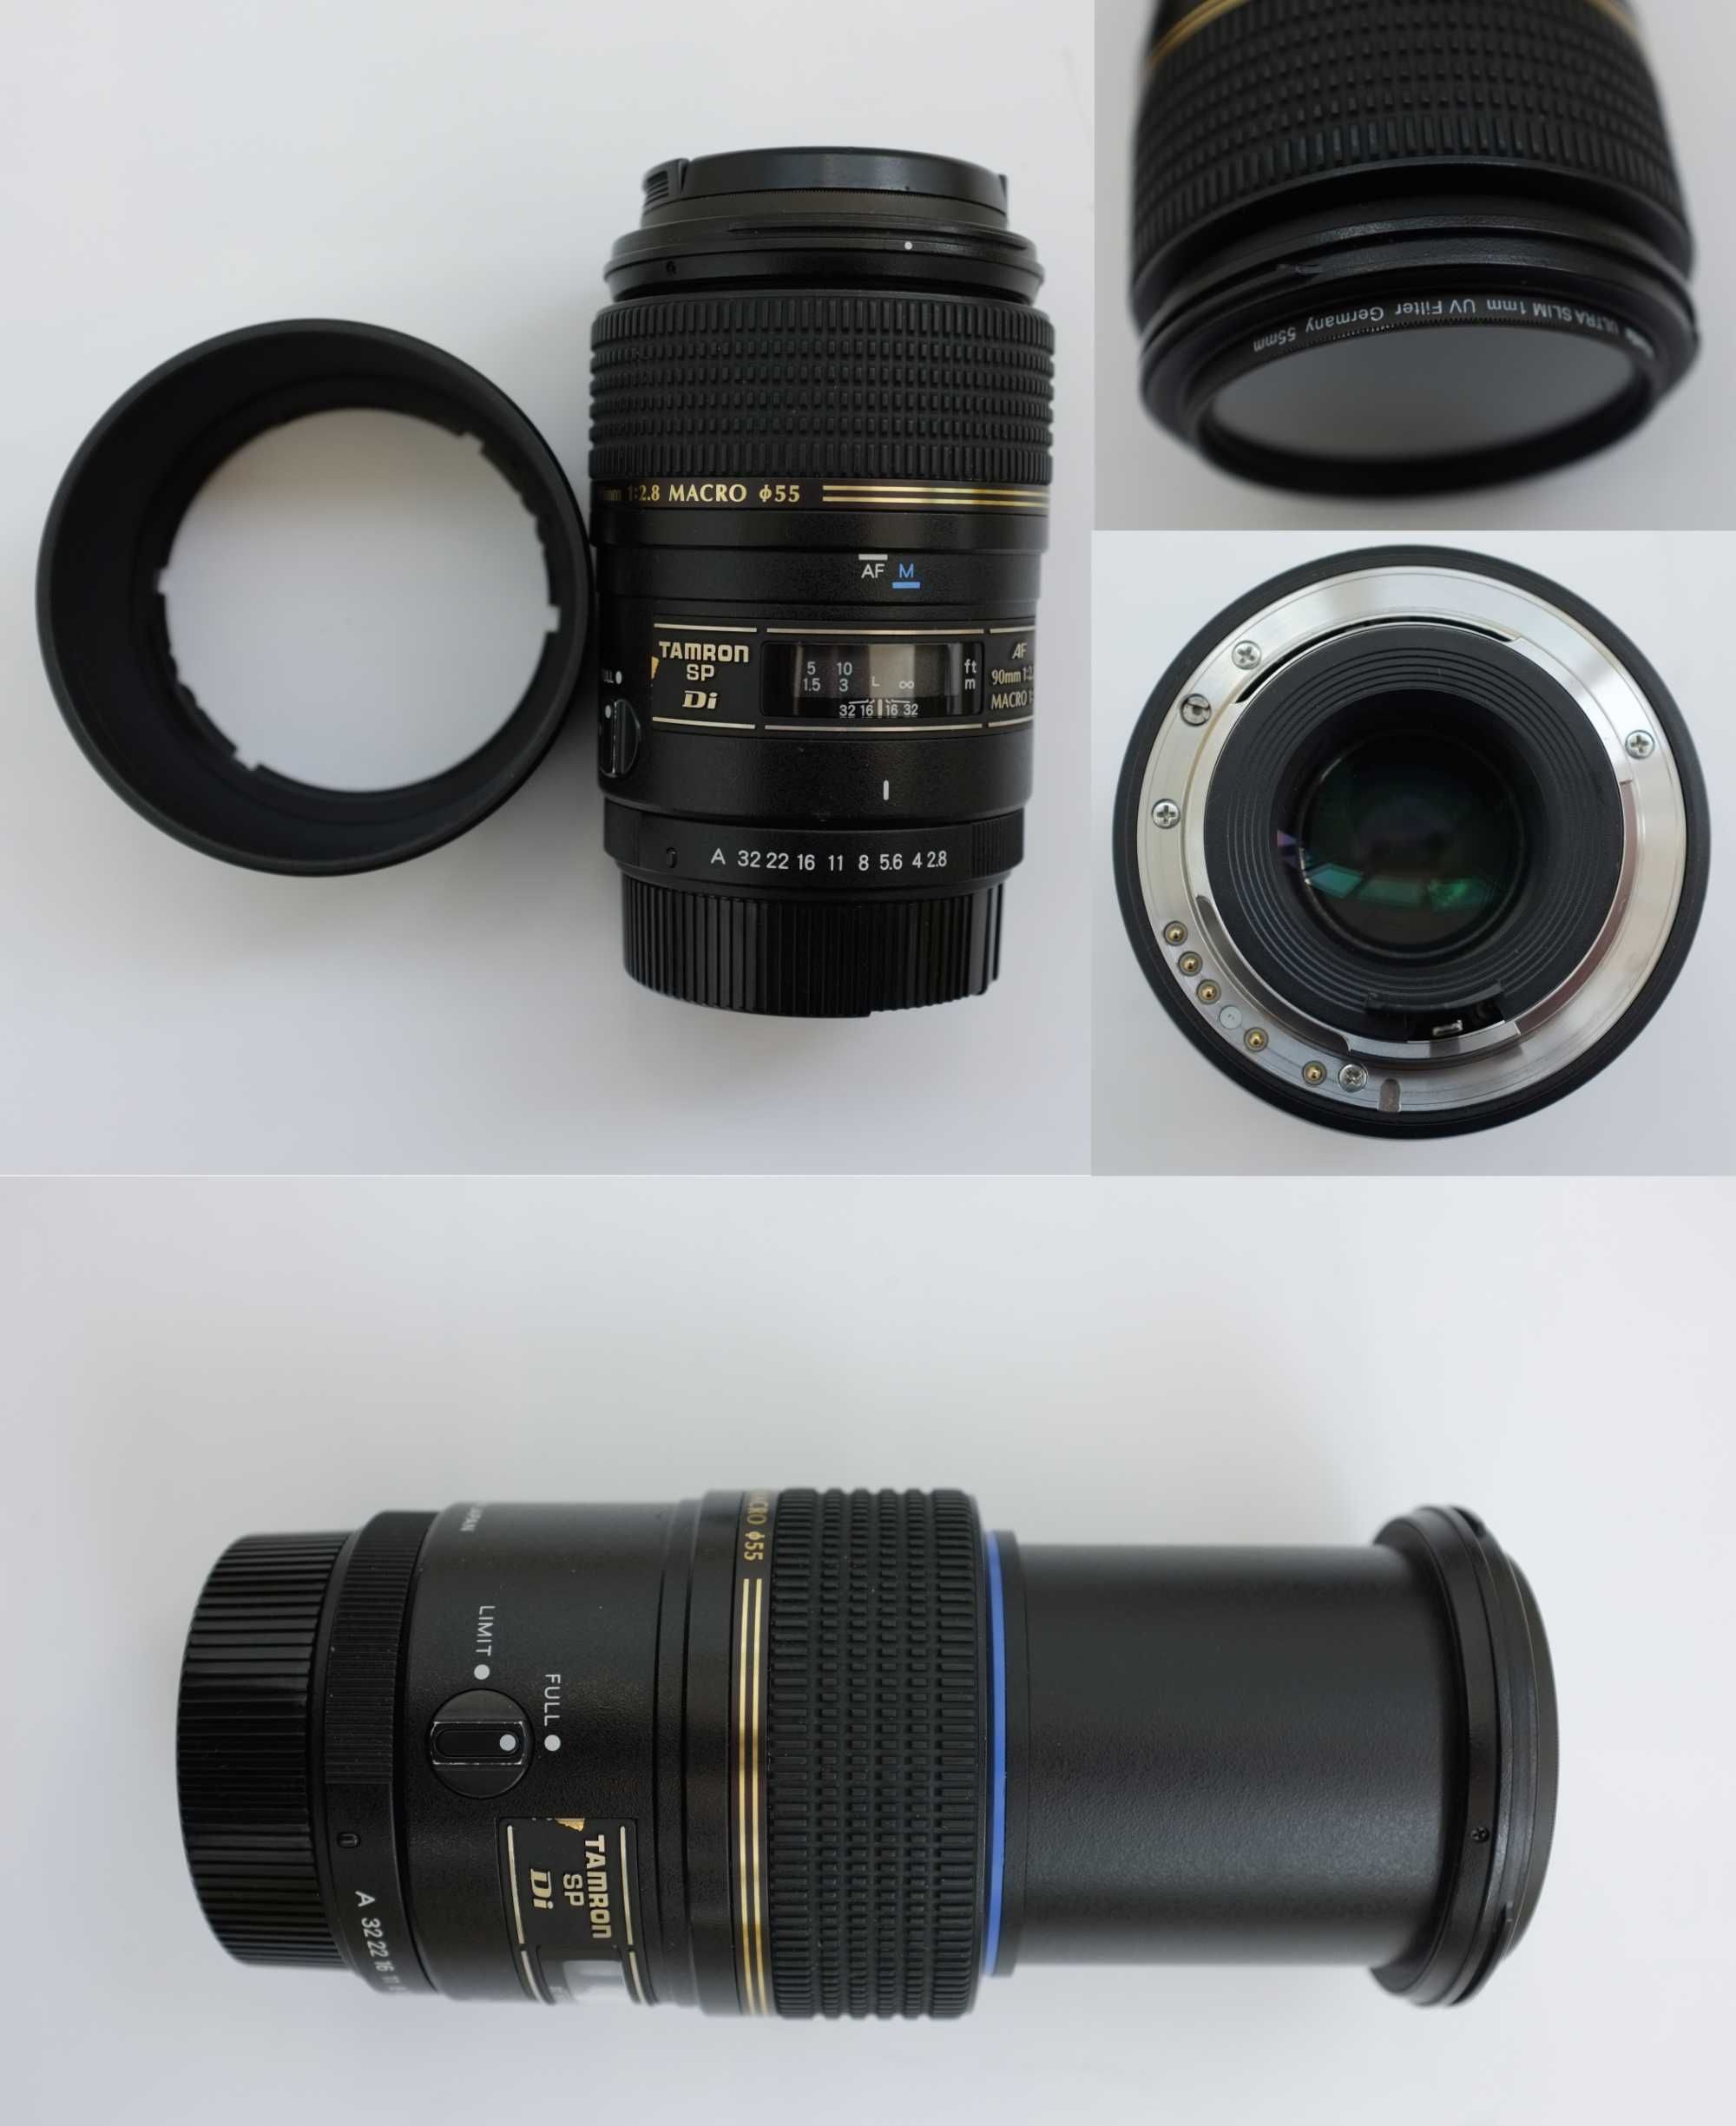 Obiective foto Tamron SP AF 90mm F2.8 Di Macro cu montură Pentax PK